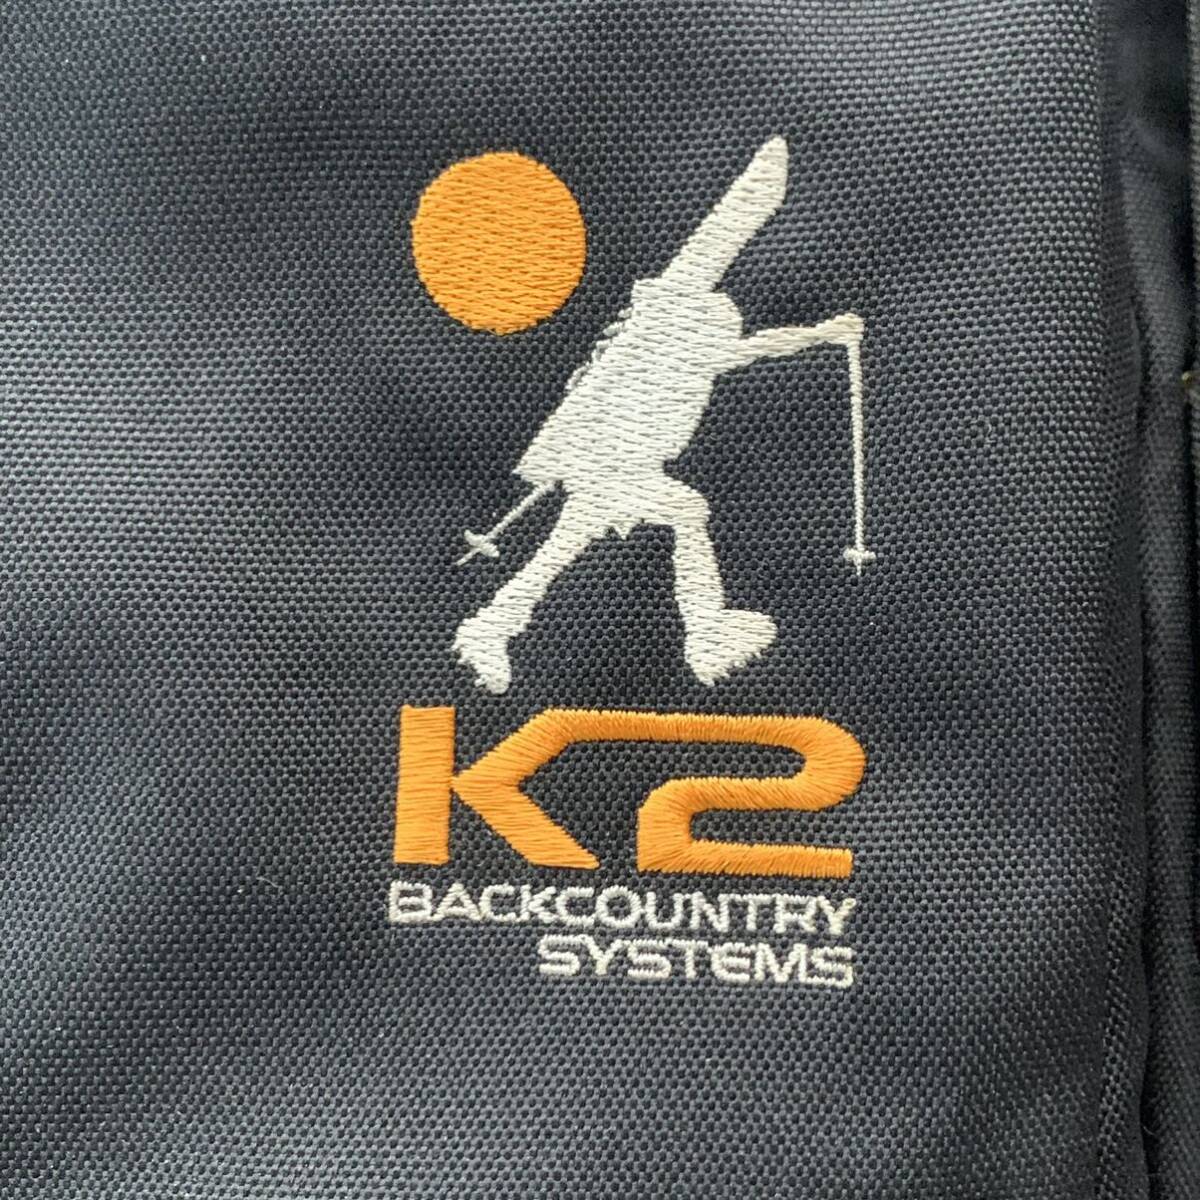 K2 BACKCOUNTRY SYSTEMS back Country backpack rucksack outdoor rucksack black 333